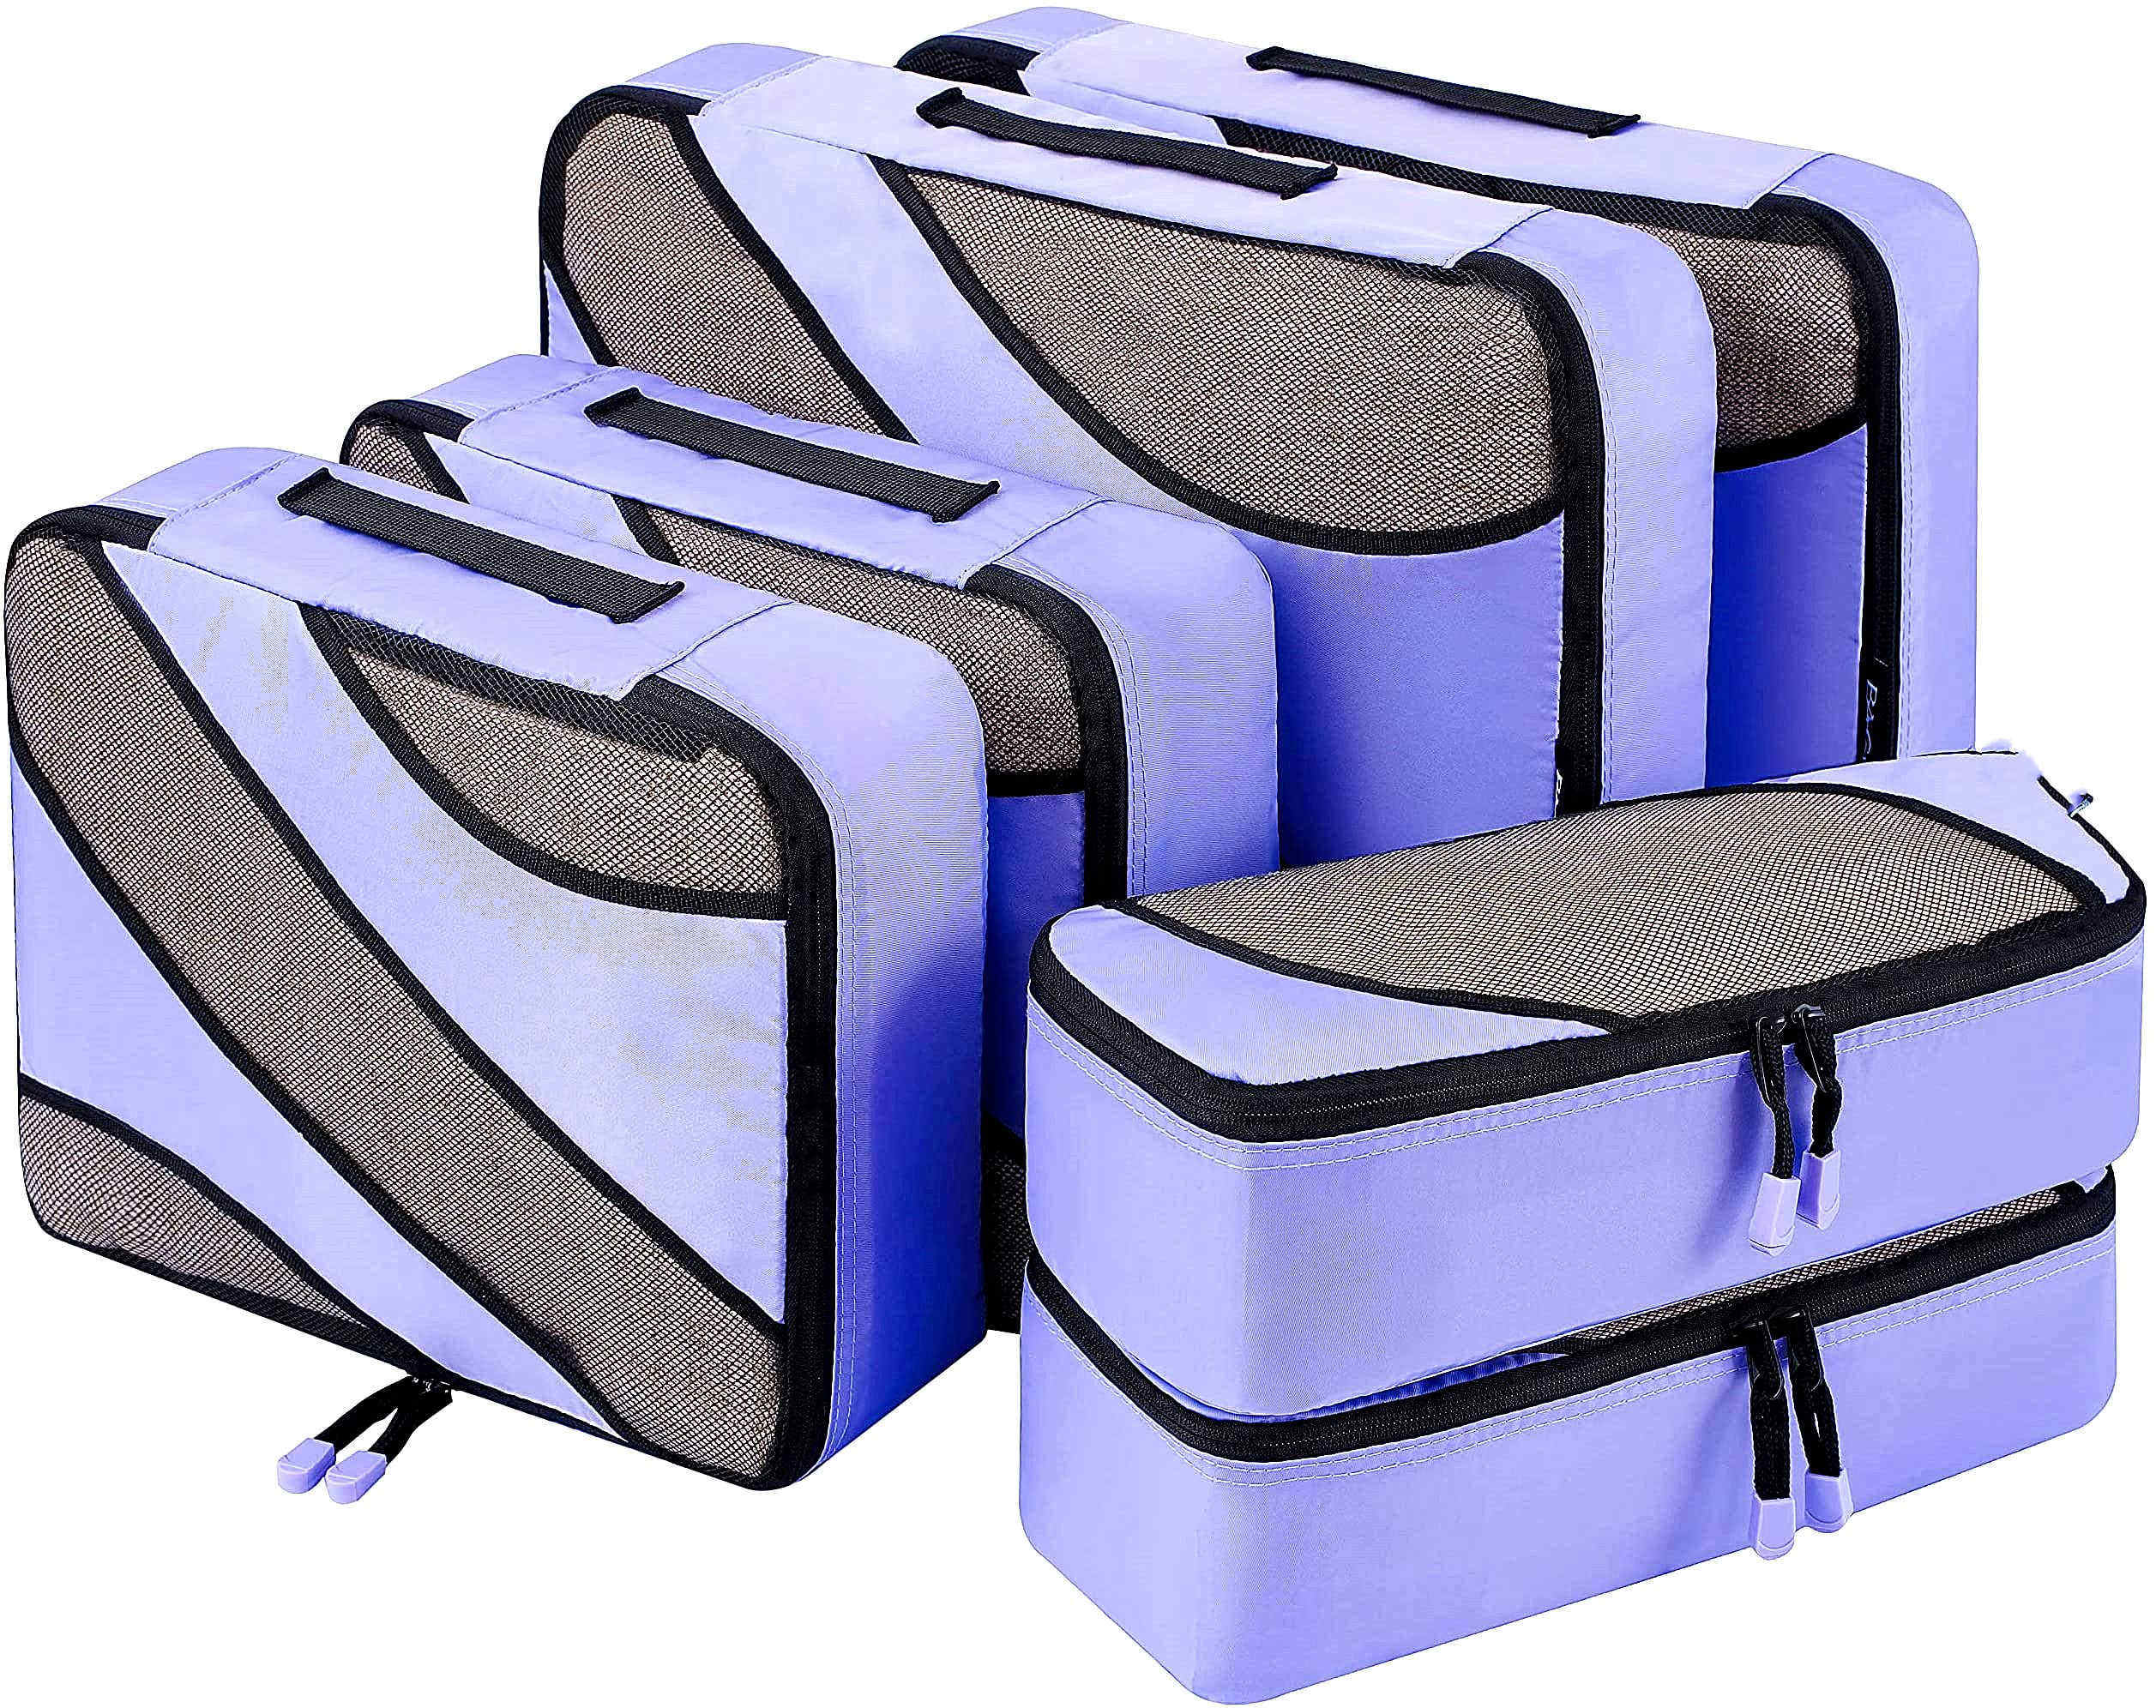 6 Set Travel Packing Cubes Bag Product Details